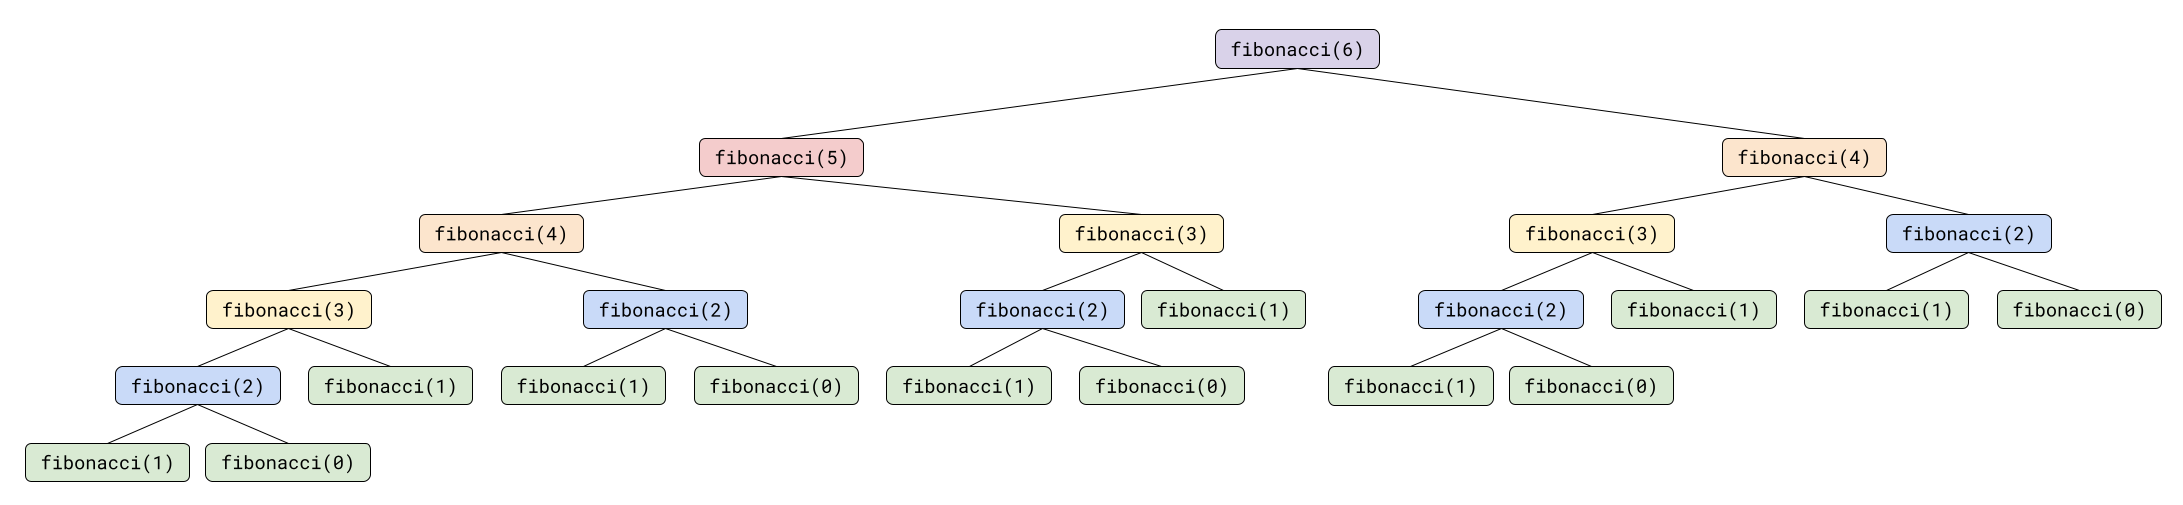 A tree diagram showing the recursive function calls required to calculate fibonacci(5). It shows 25 recursive calls.